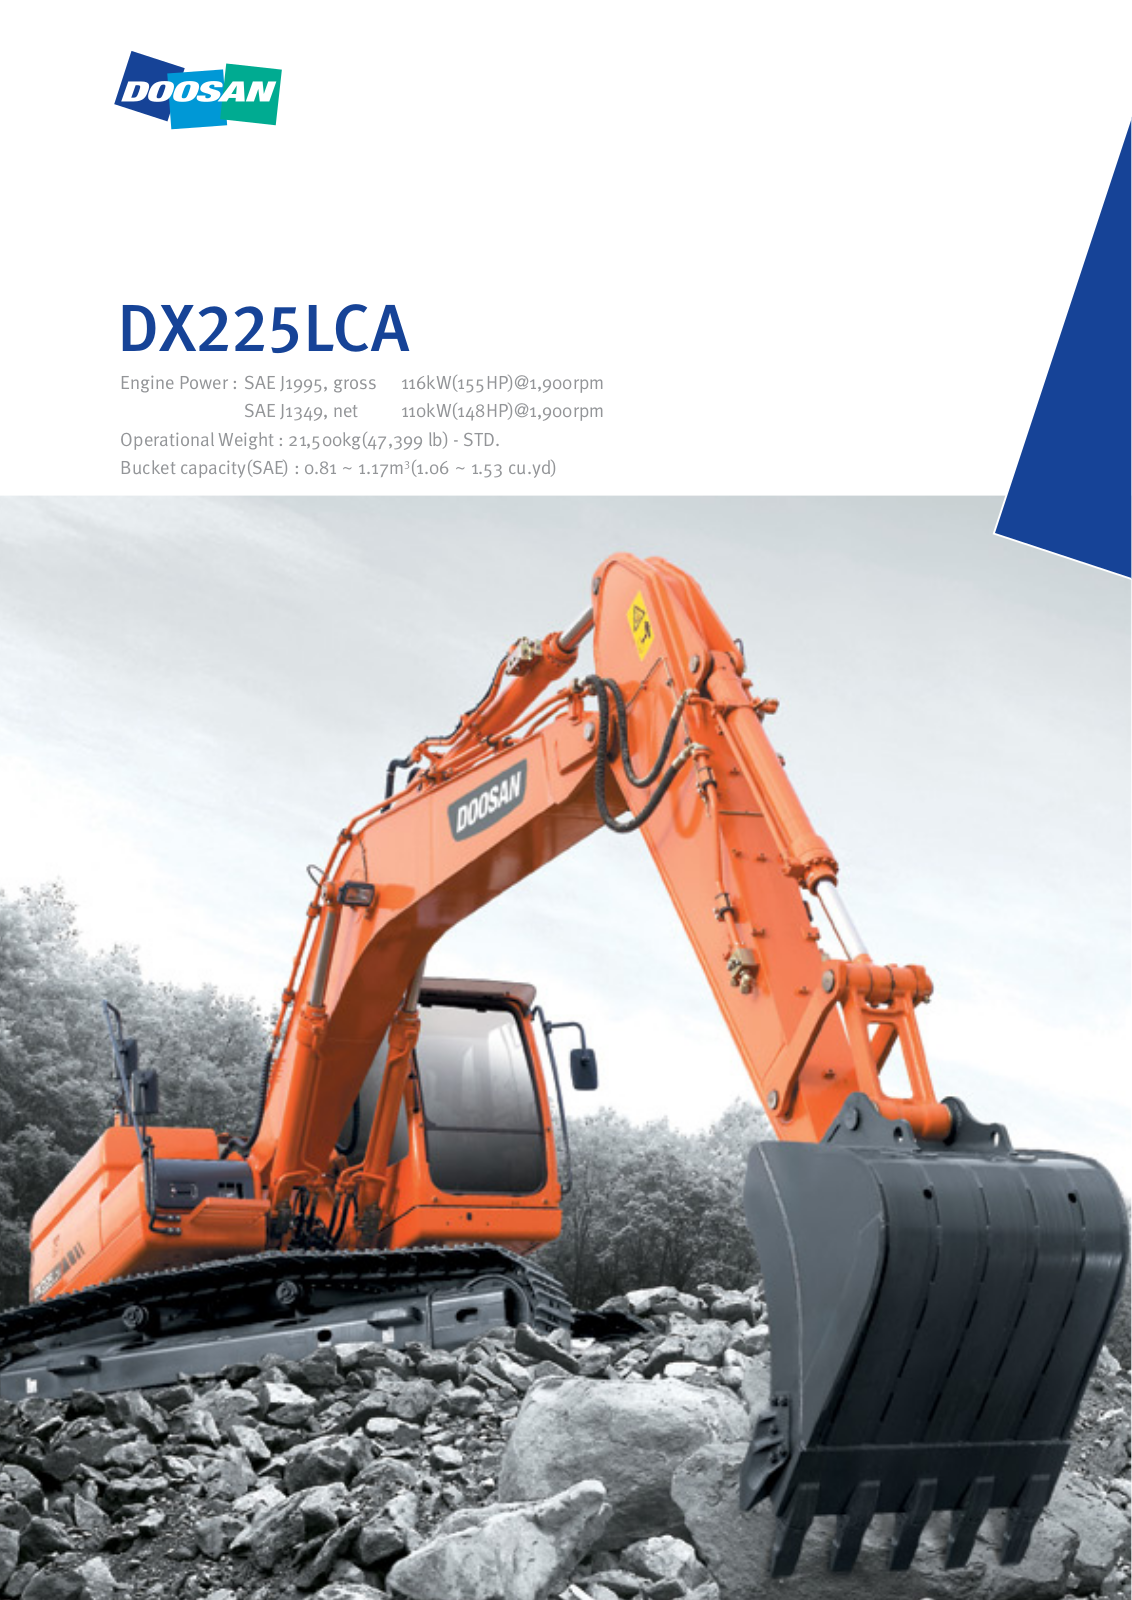 Doosan DX225LCA Service Manual